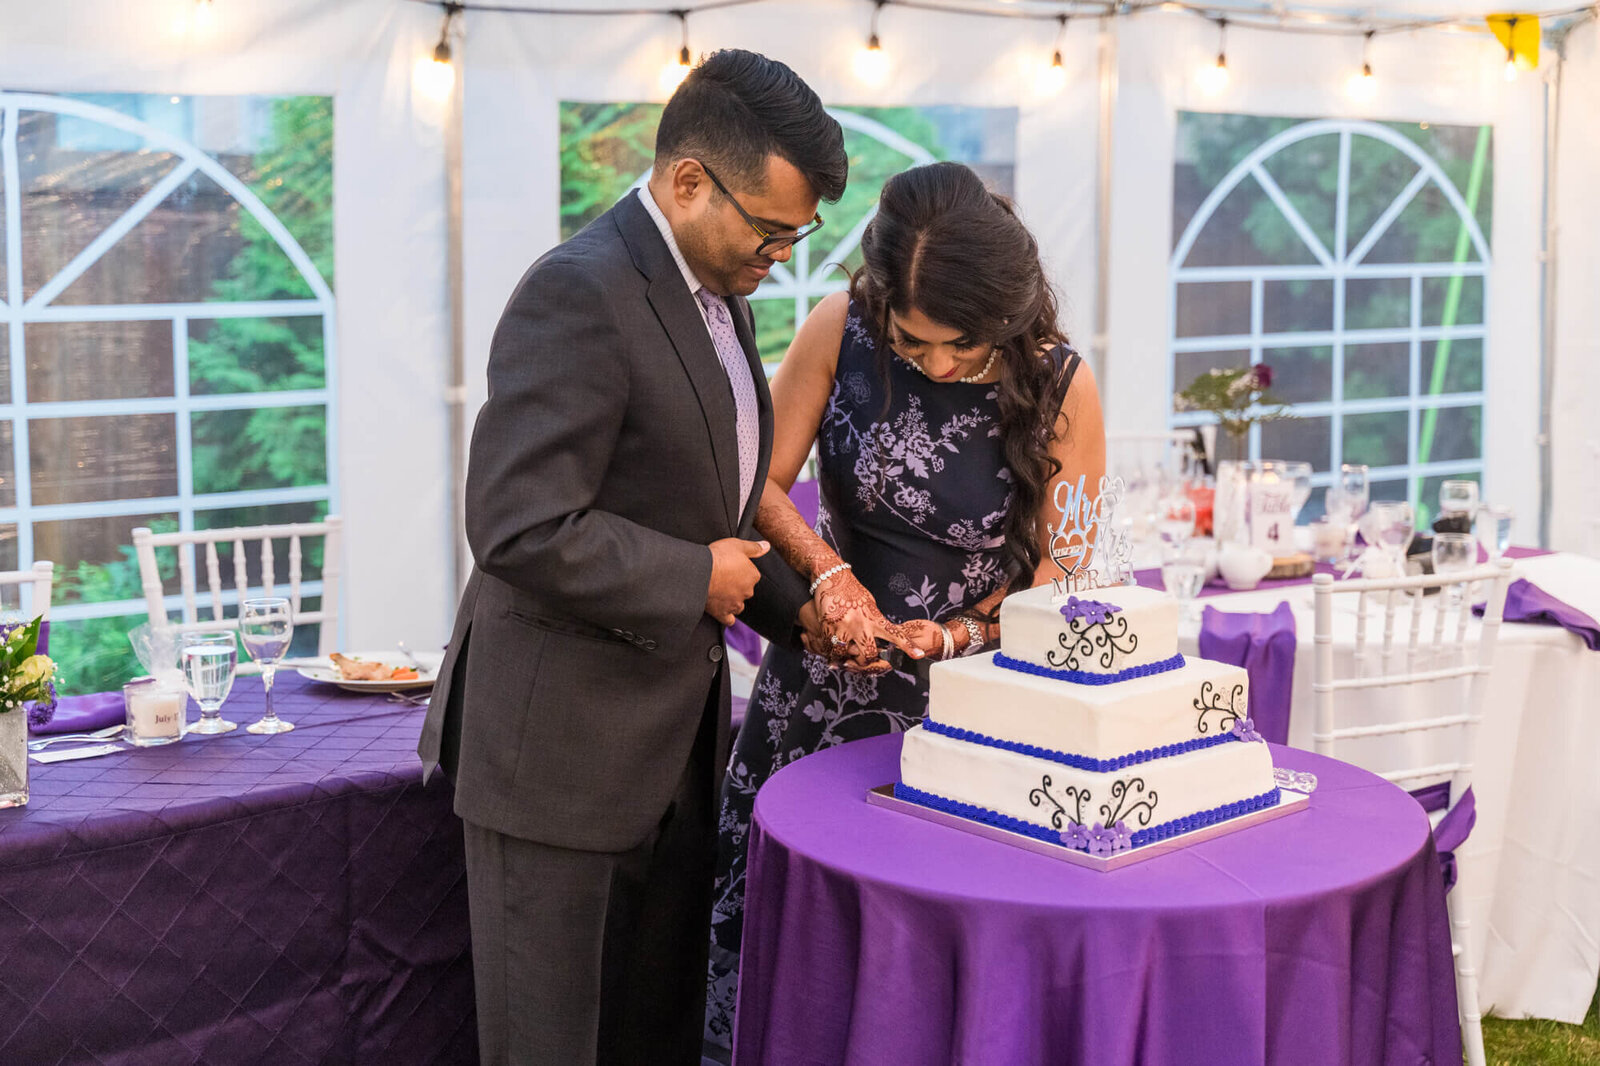 East Indian Wedding couple cutting wedding cake